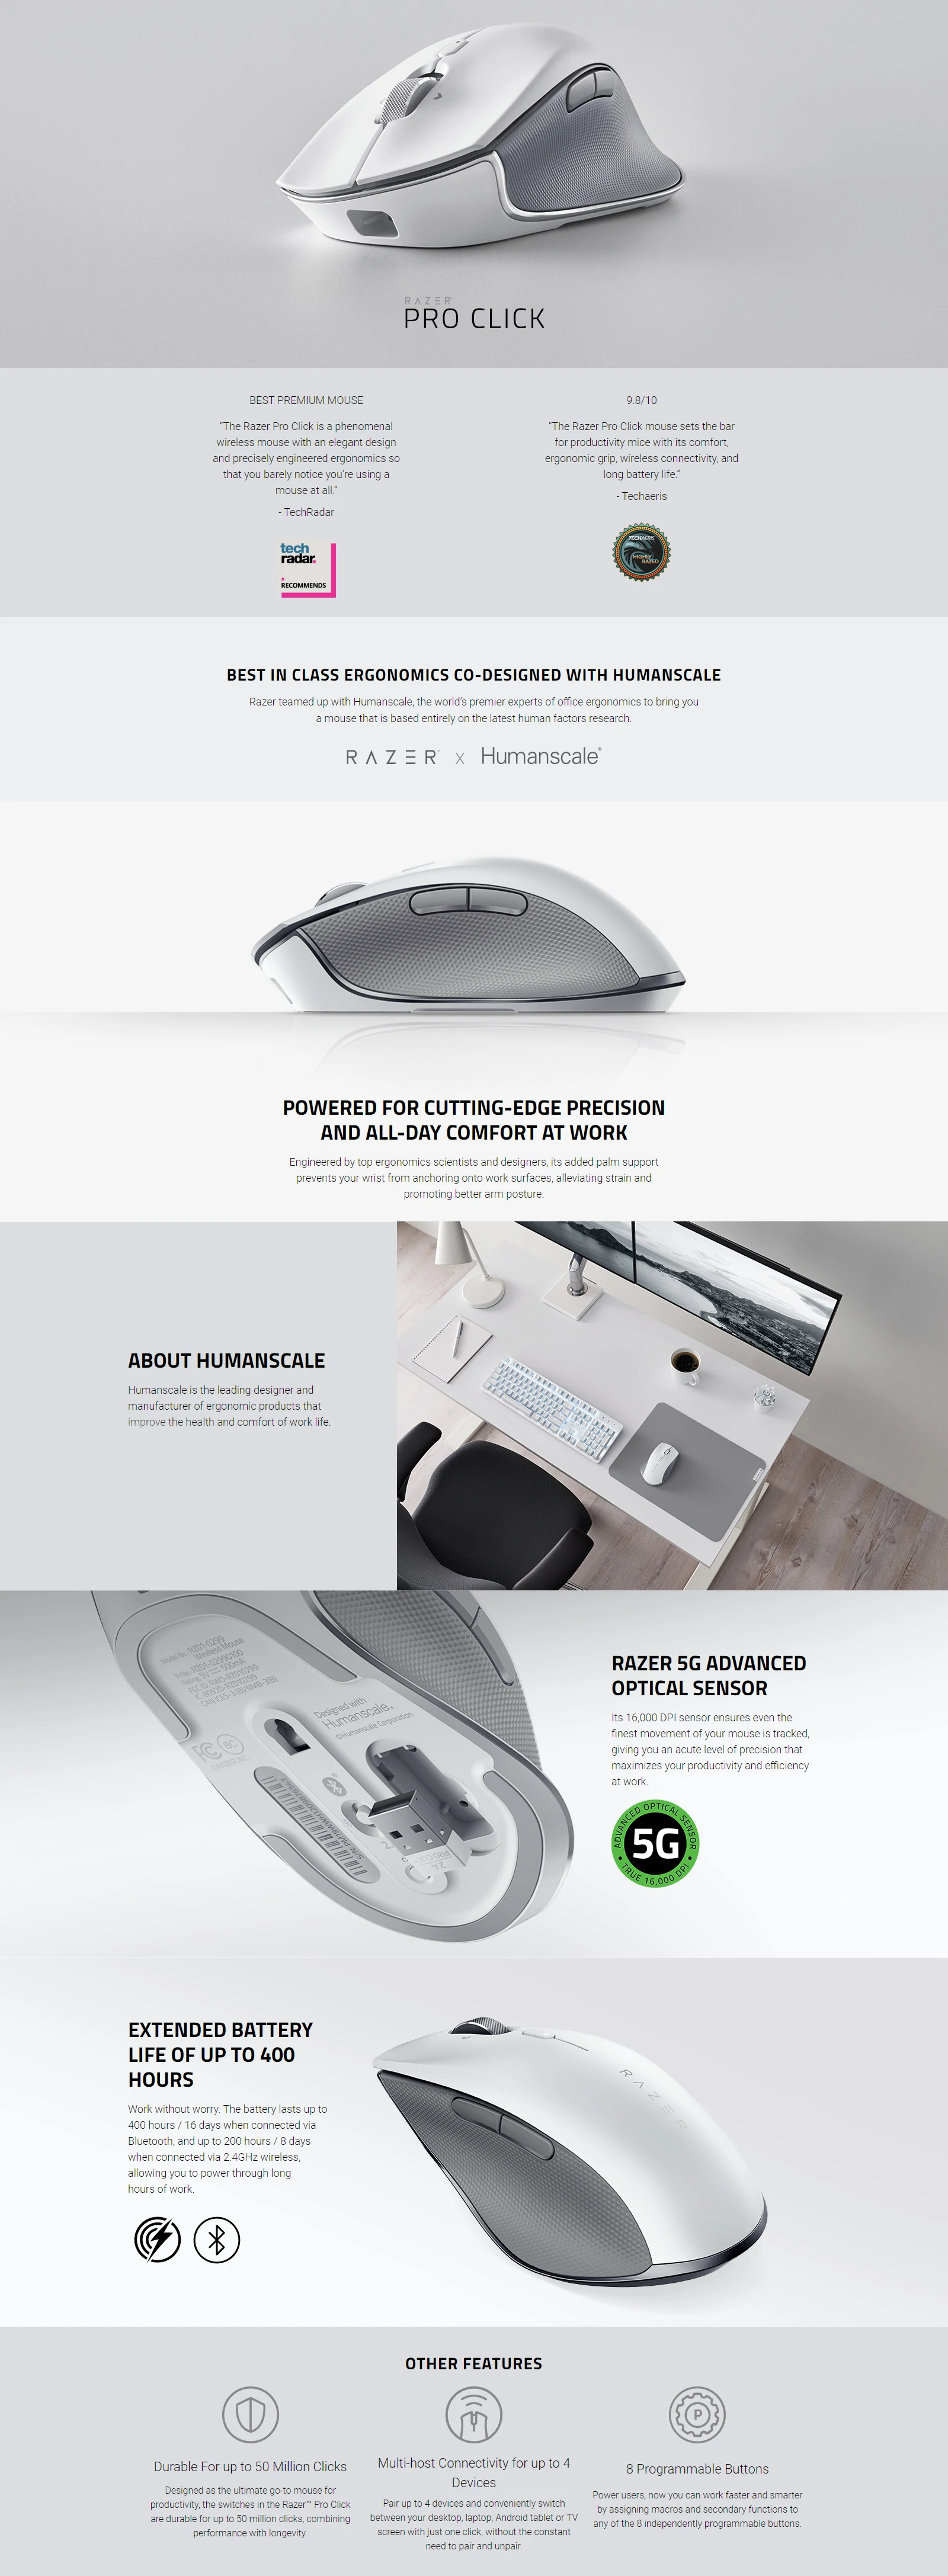 Overview - Razer Pro Click High-Precision Ergonomic Wireless Mouse